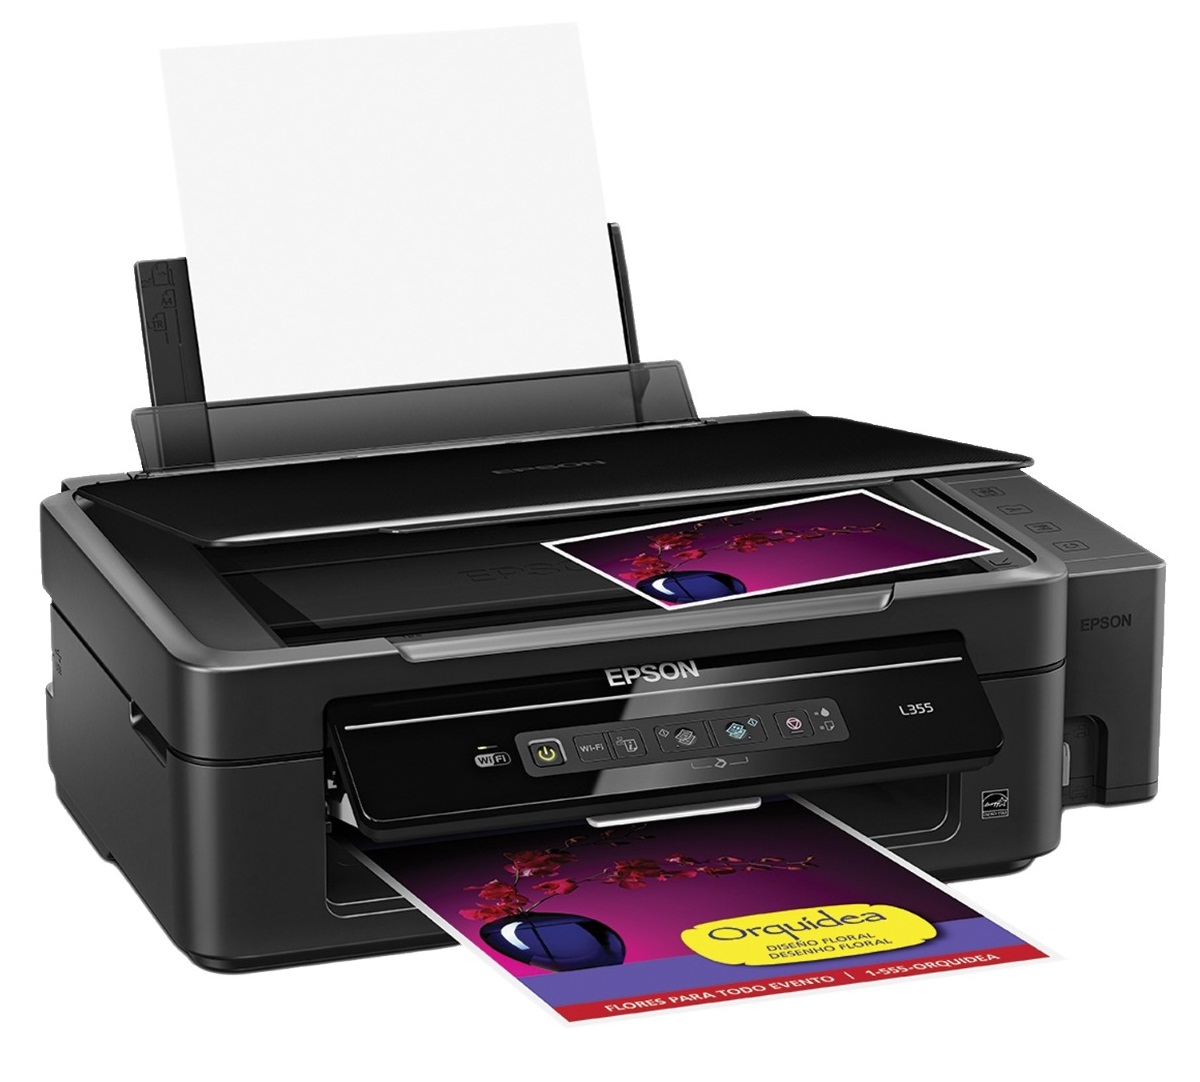 Epson L355 Printer Software For Mac